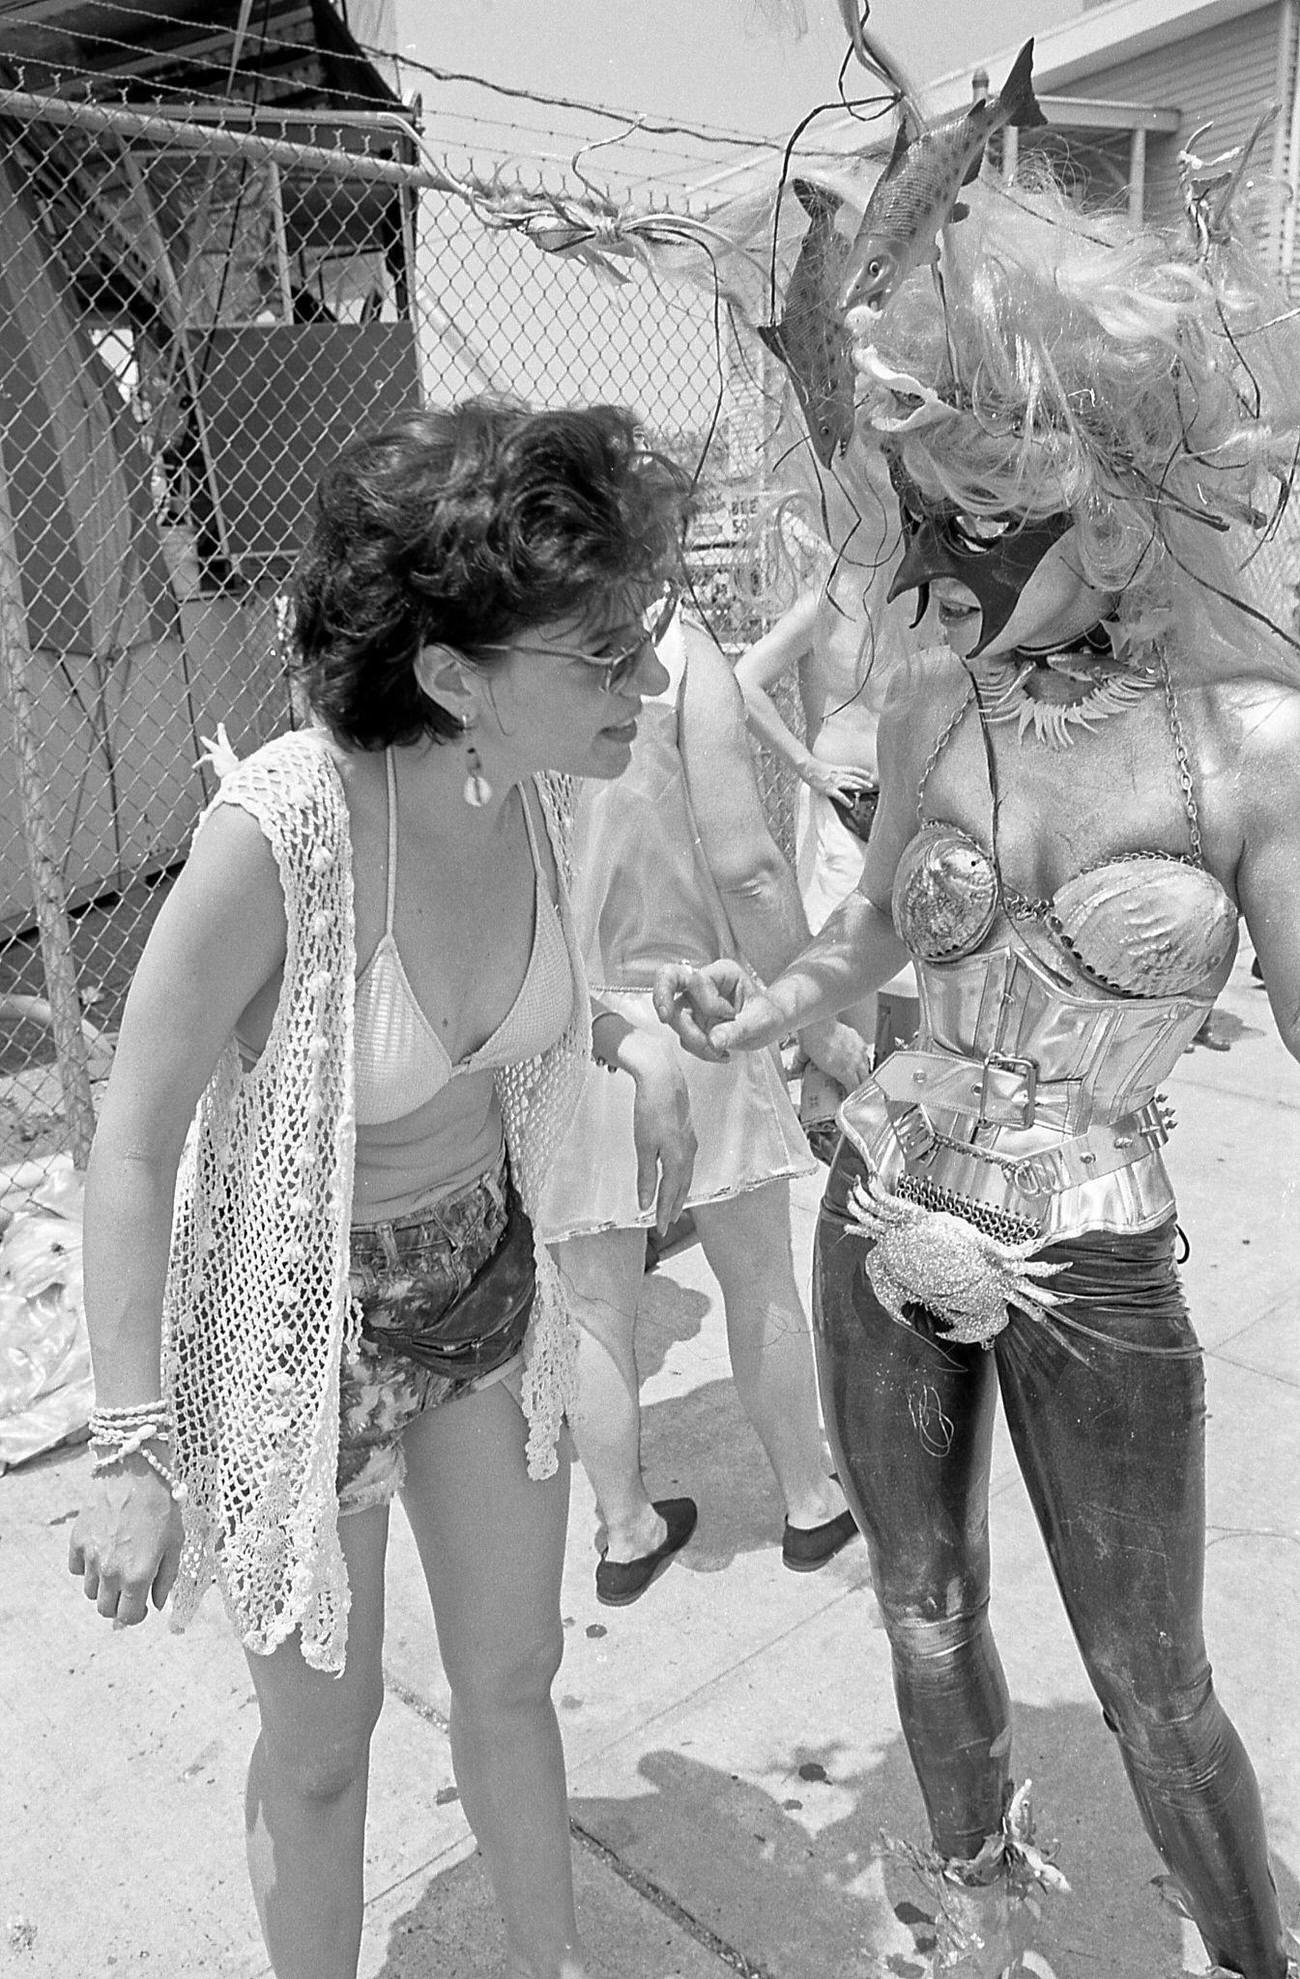 Woman Talks To Masked Mermaid At Coney Island Mermaid Parade, 1997